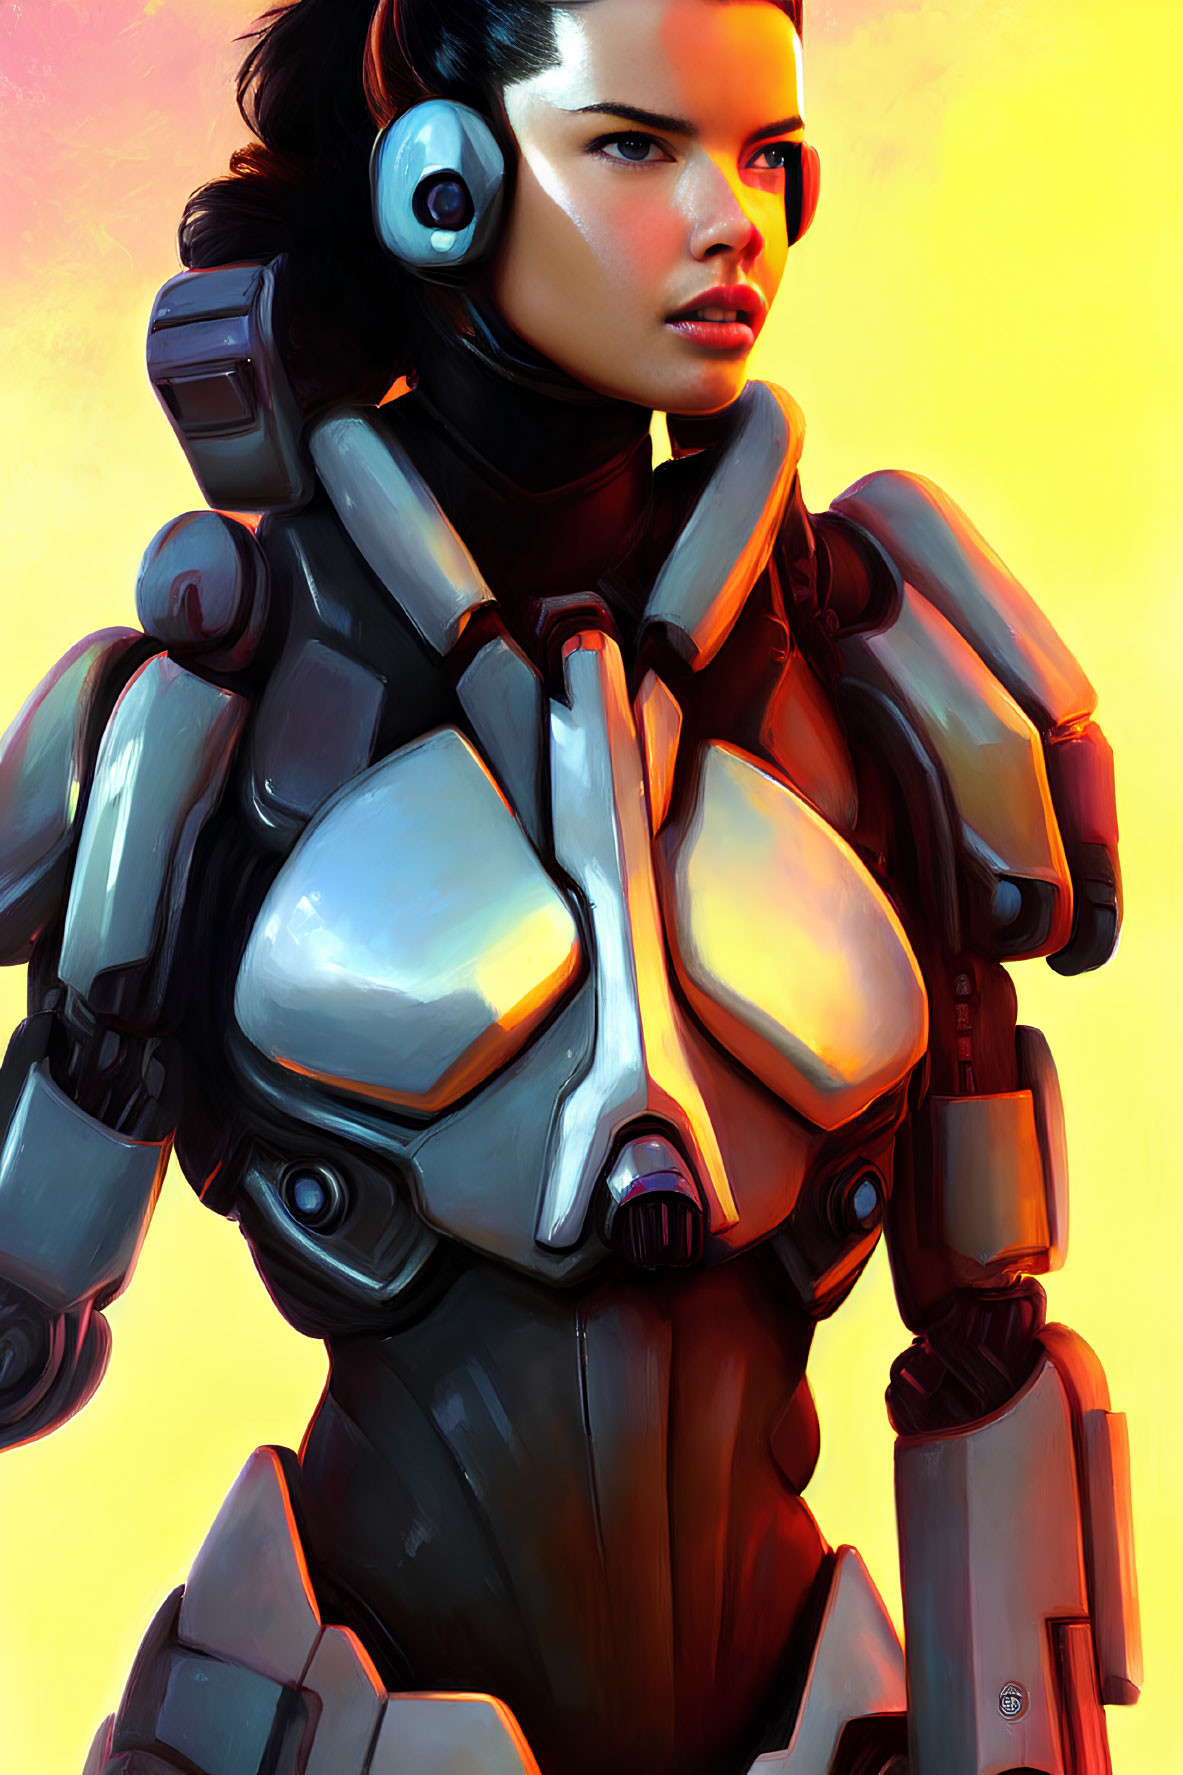 Digital Artwork: Woman in Futuristic Armor on Warm Background